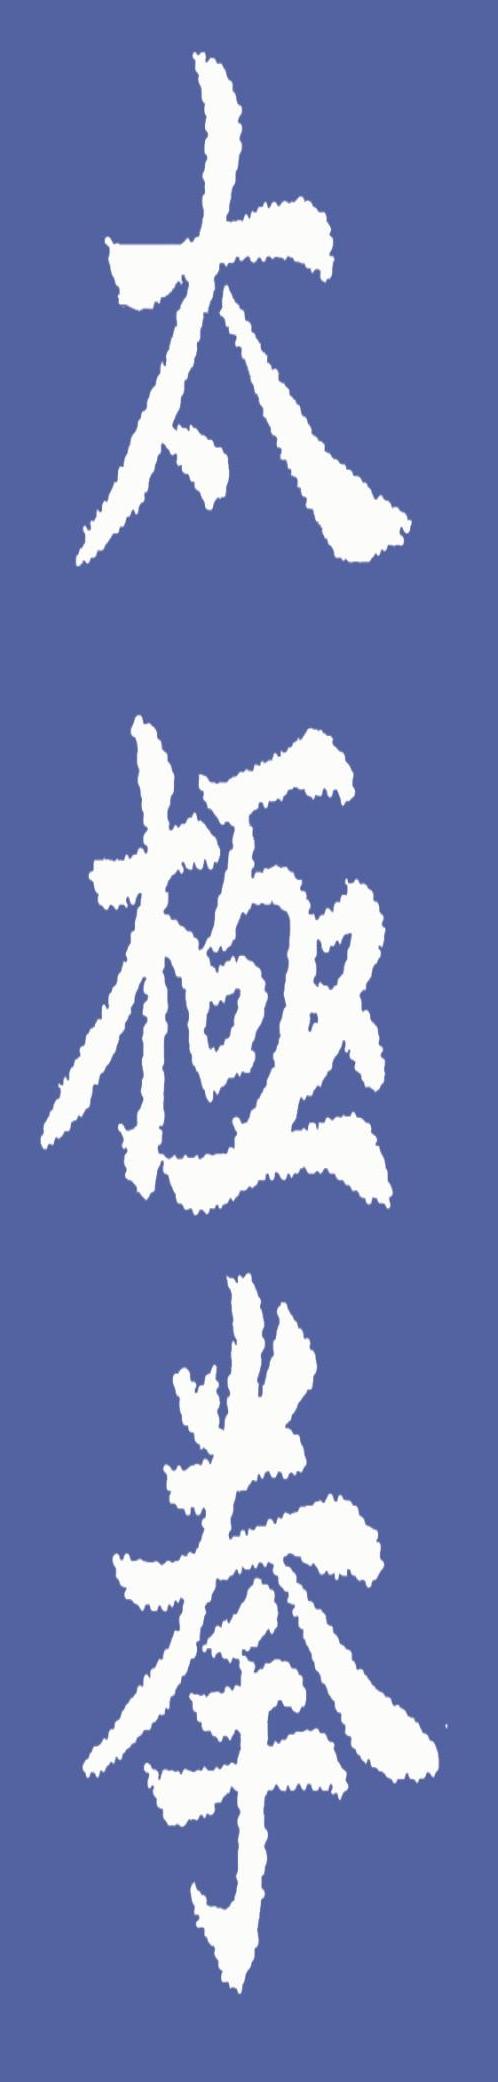 Tai chi chuan written in Chinese characters